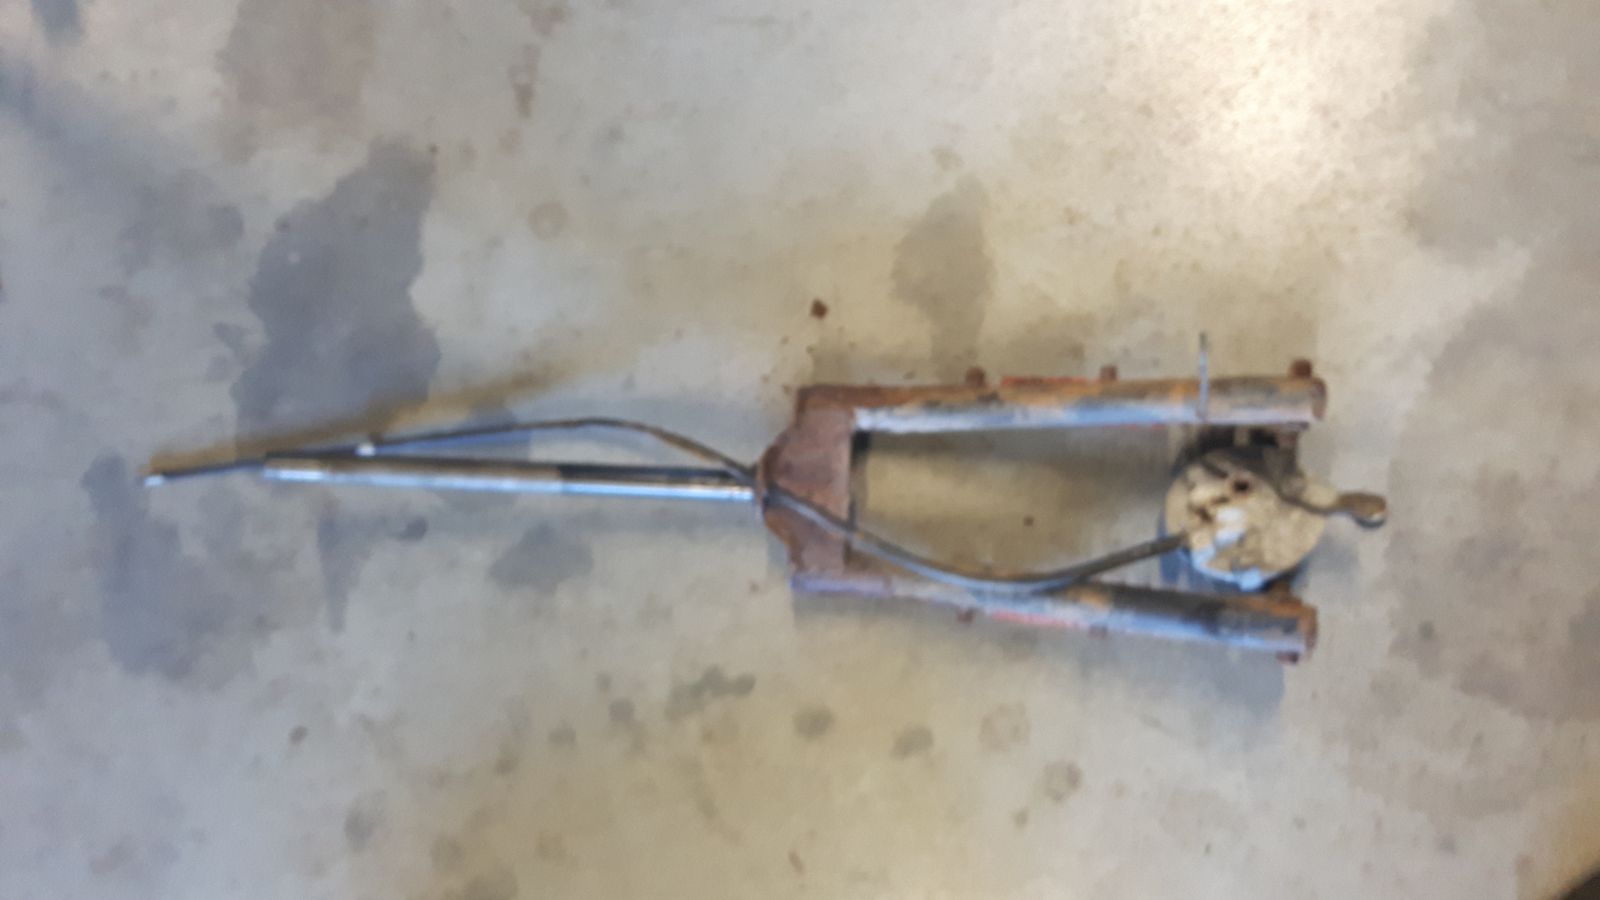 Peugeot Rapido fork with brake drum